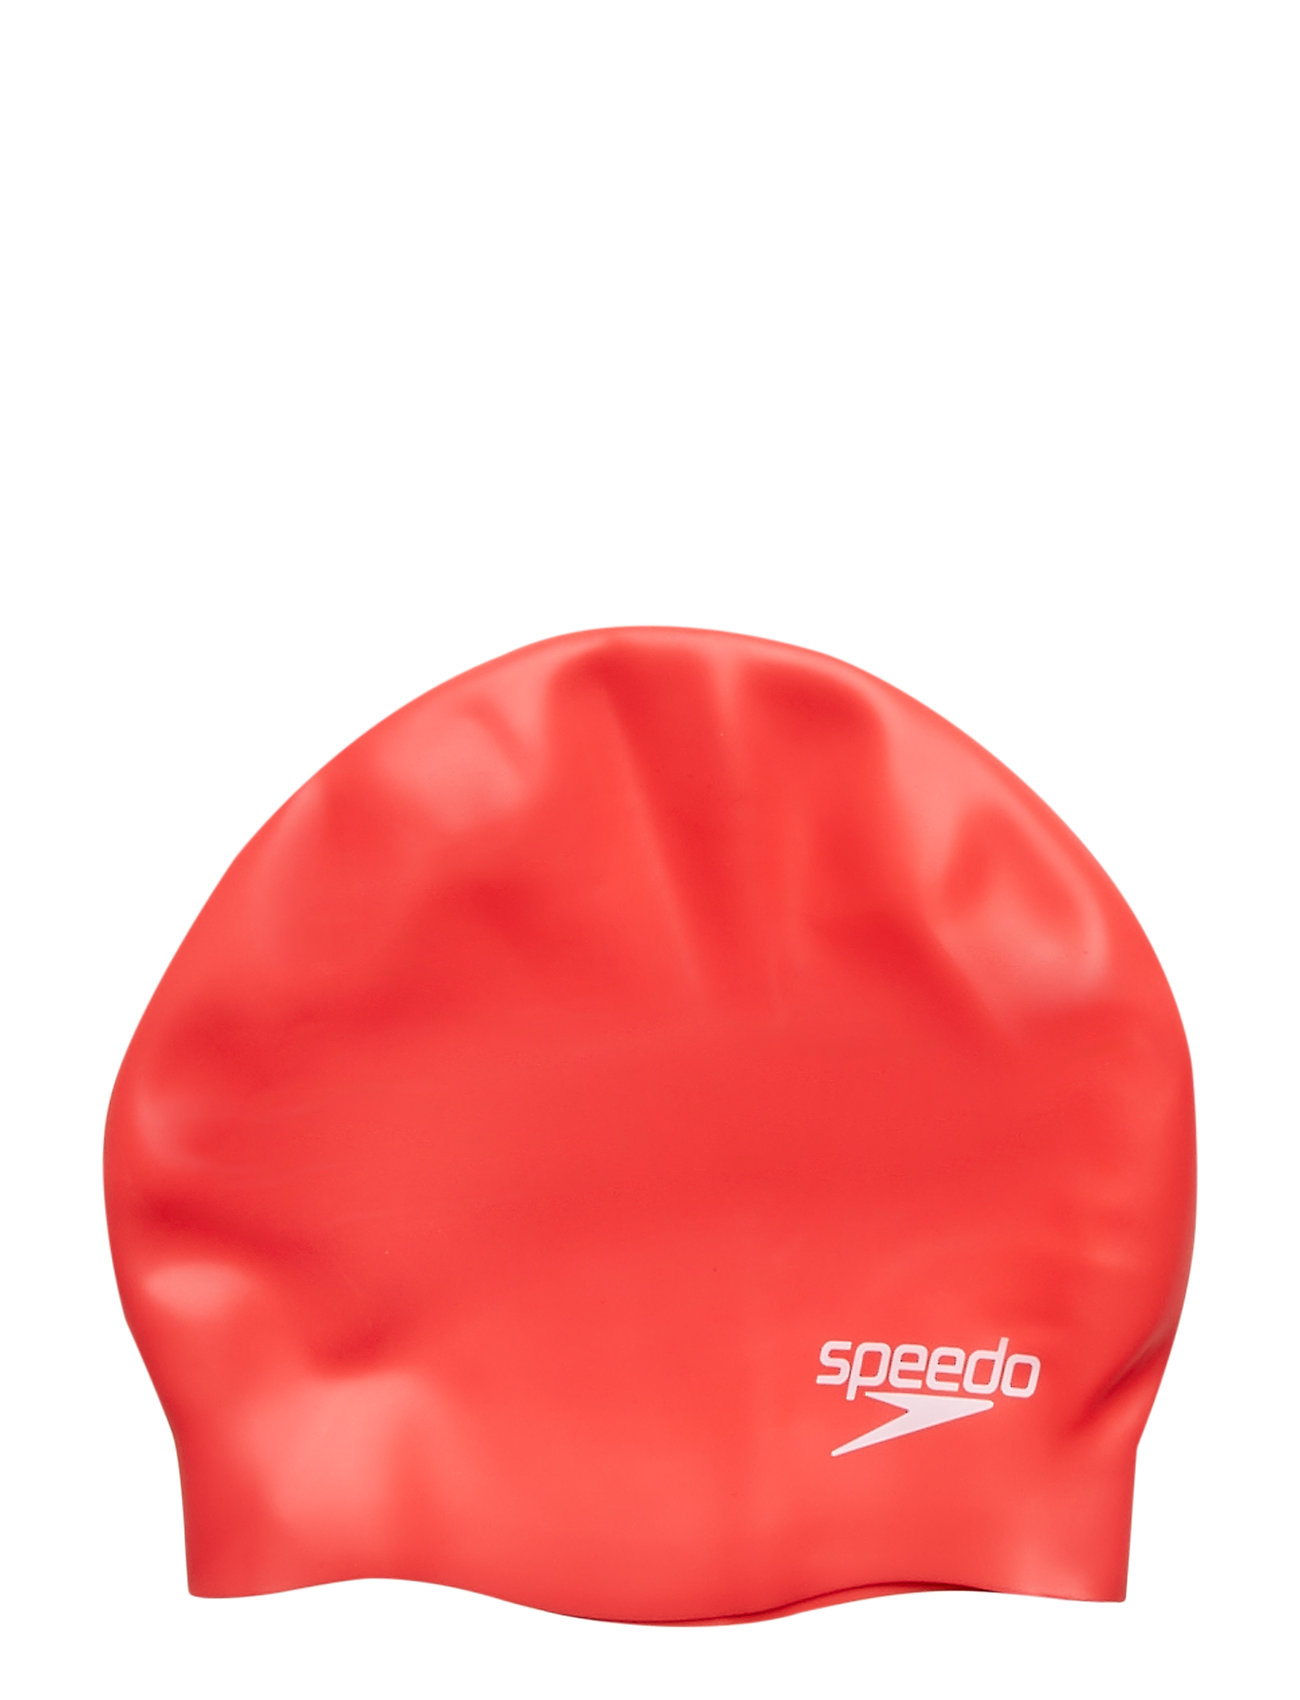 Speedo Silicon Moulded Cap Au, Whi Mop Accessories Sports Equipment Swimming Accessories Punainen Speedo